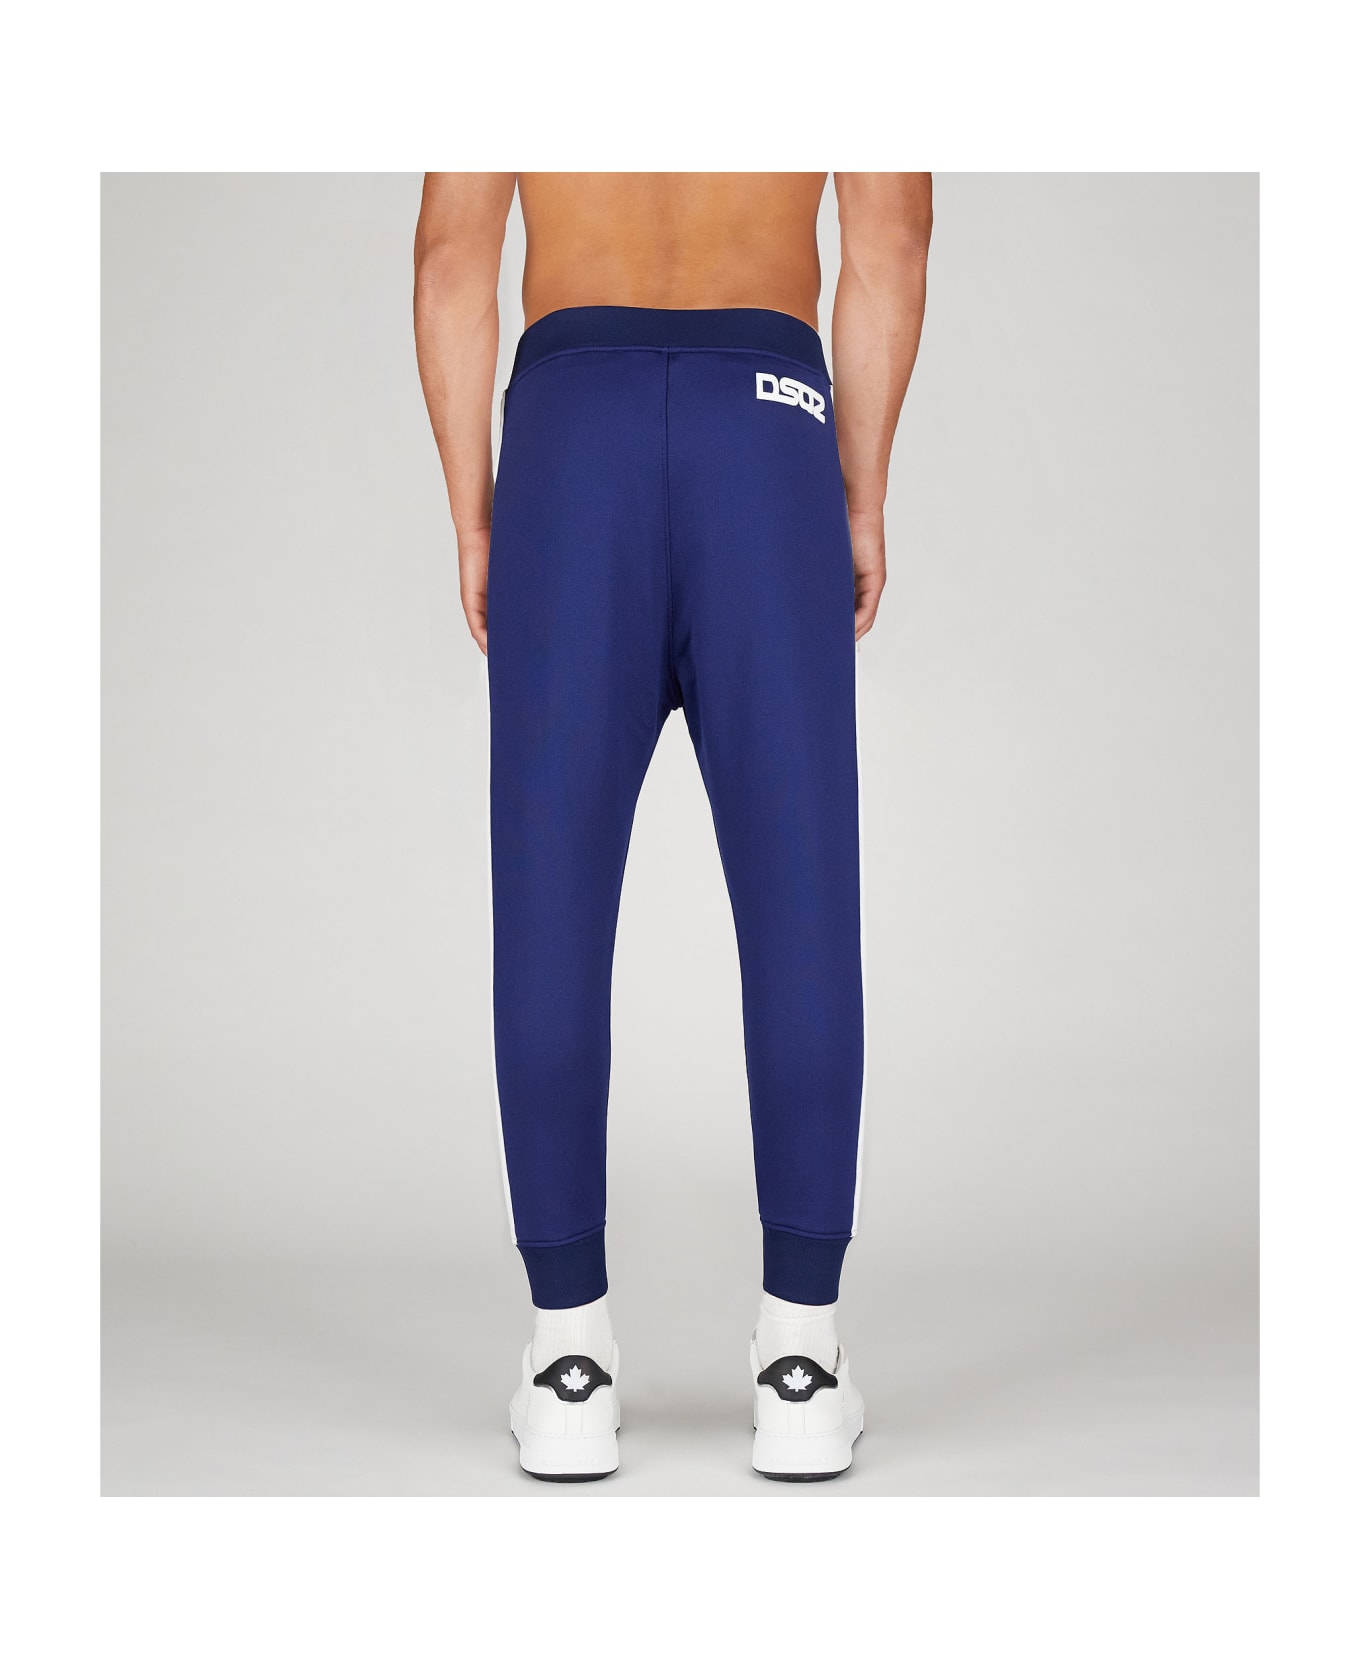 Dsquared2 Pants - Navy blue